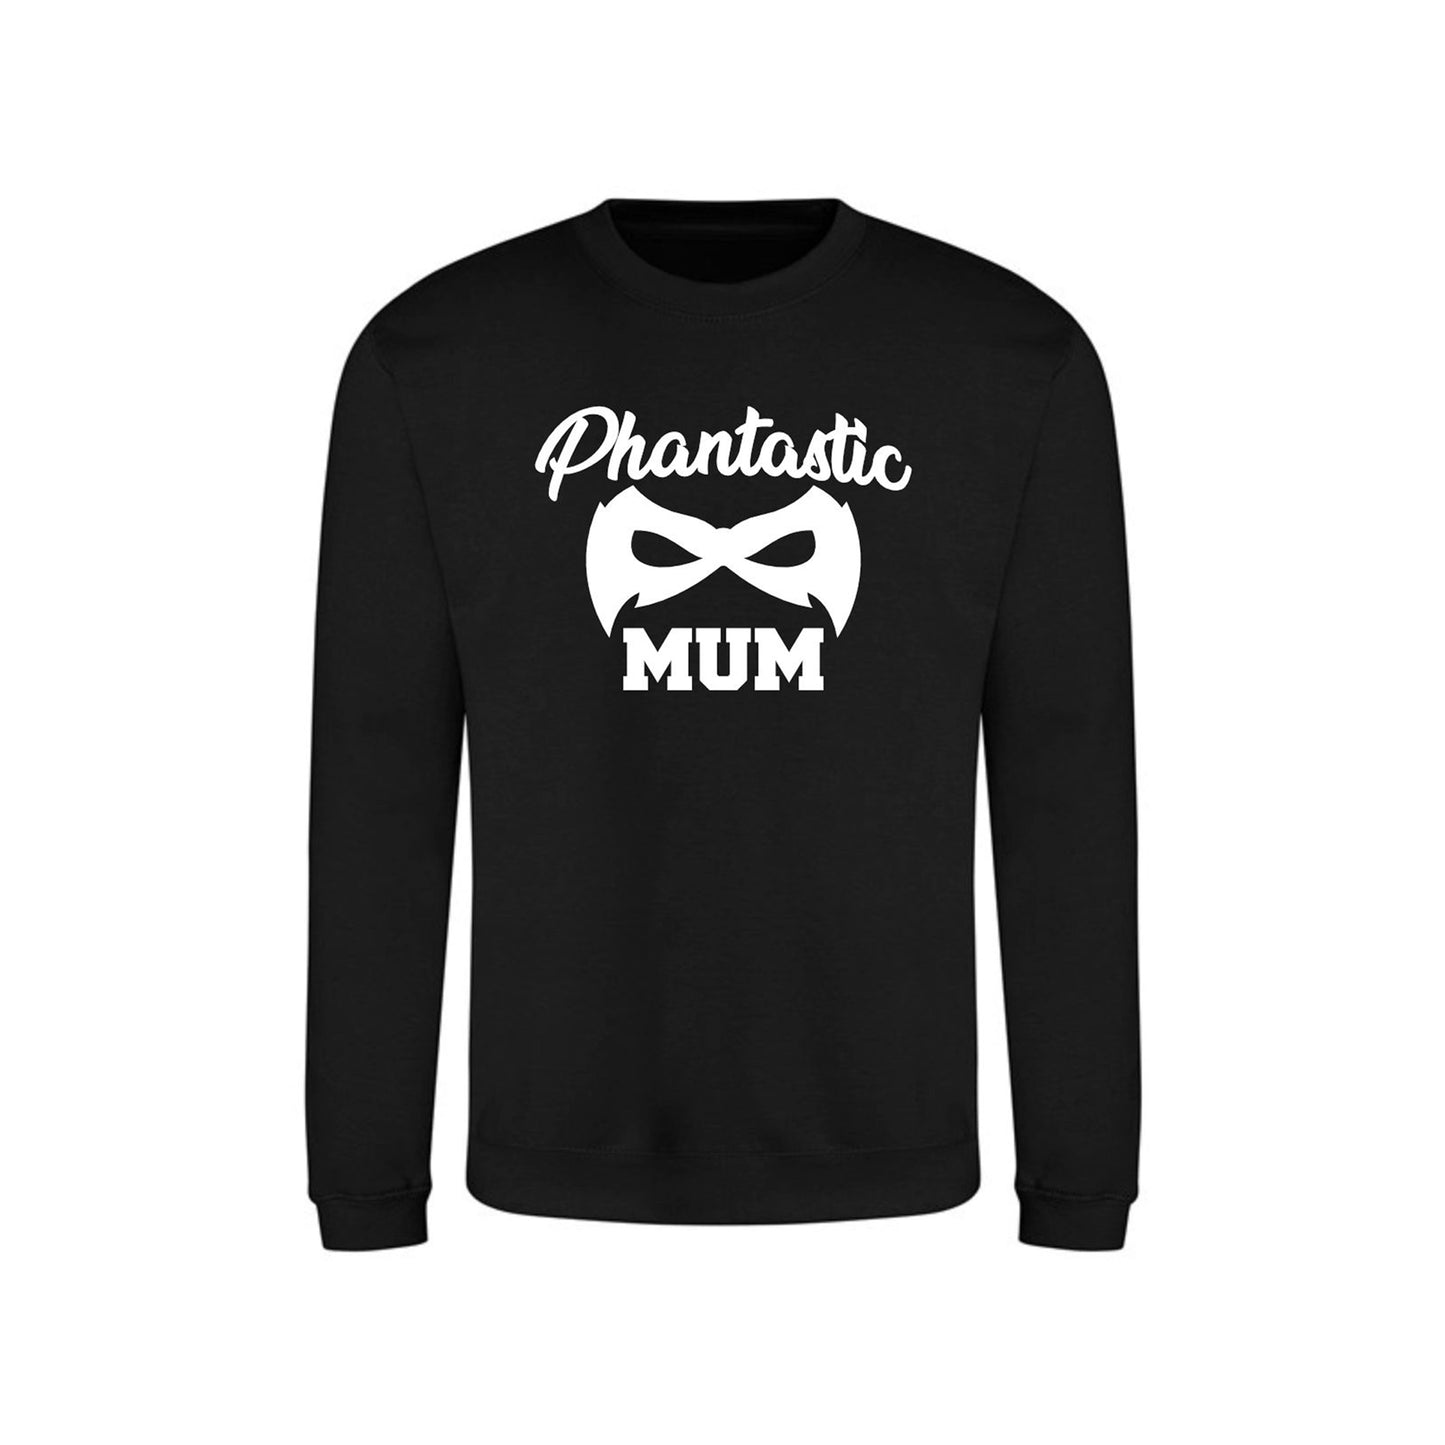 Phantastic Mum Sweatshirt